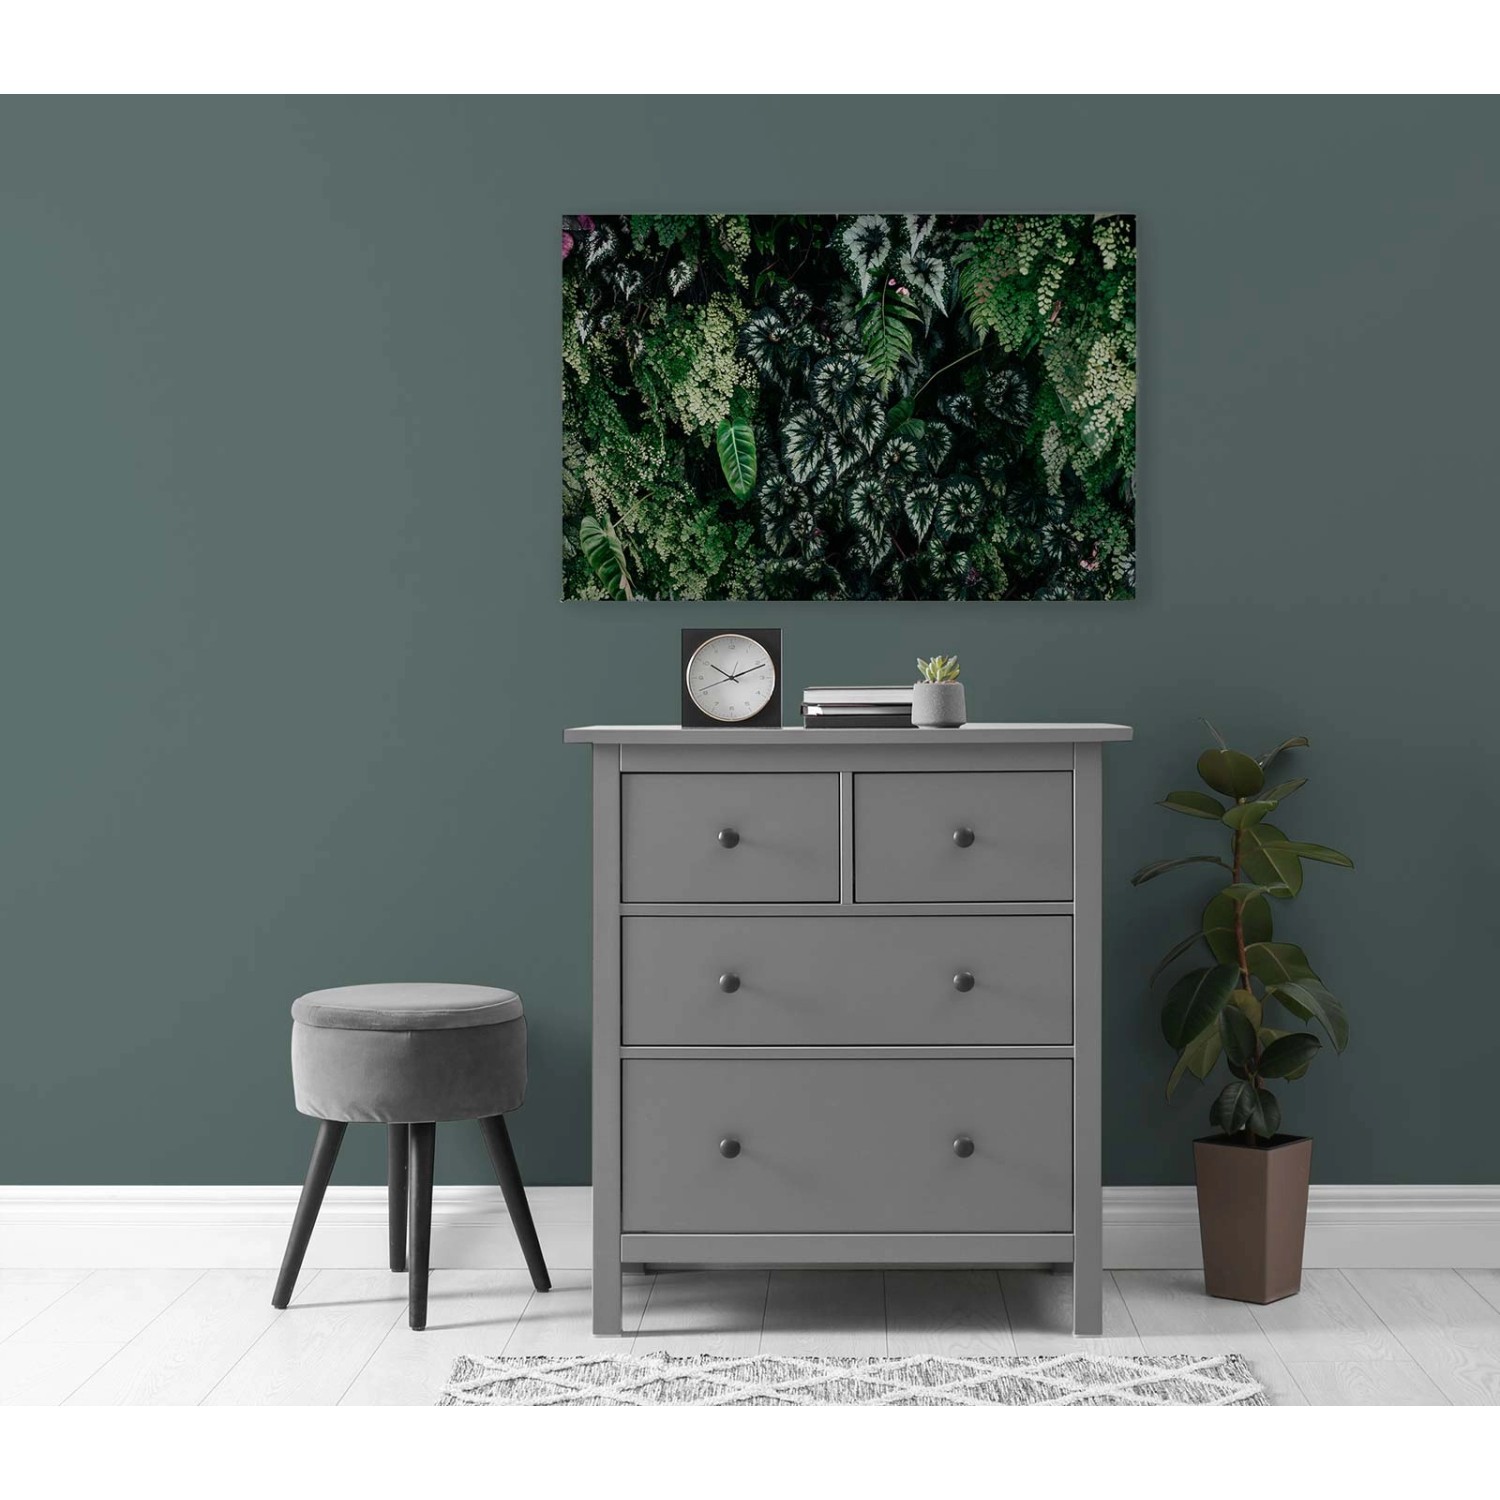 Bricoflor Bild Auf Leinwand Blätter Motiv Dunkelgrün Dschungel Wandbild 90 günstig online kaufen